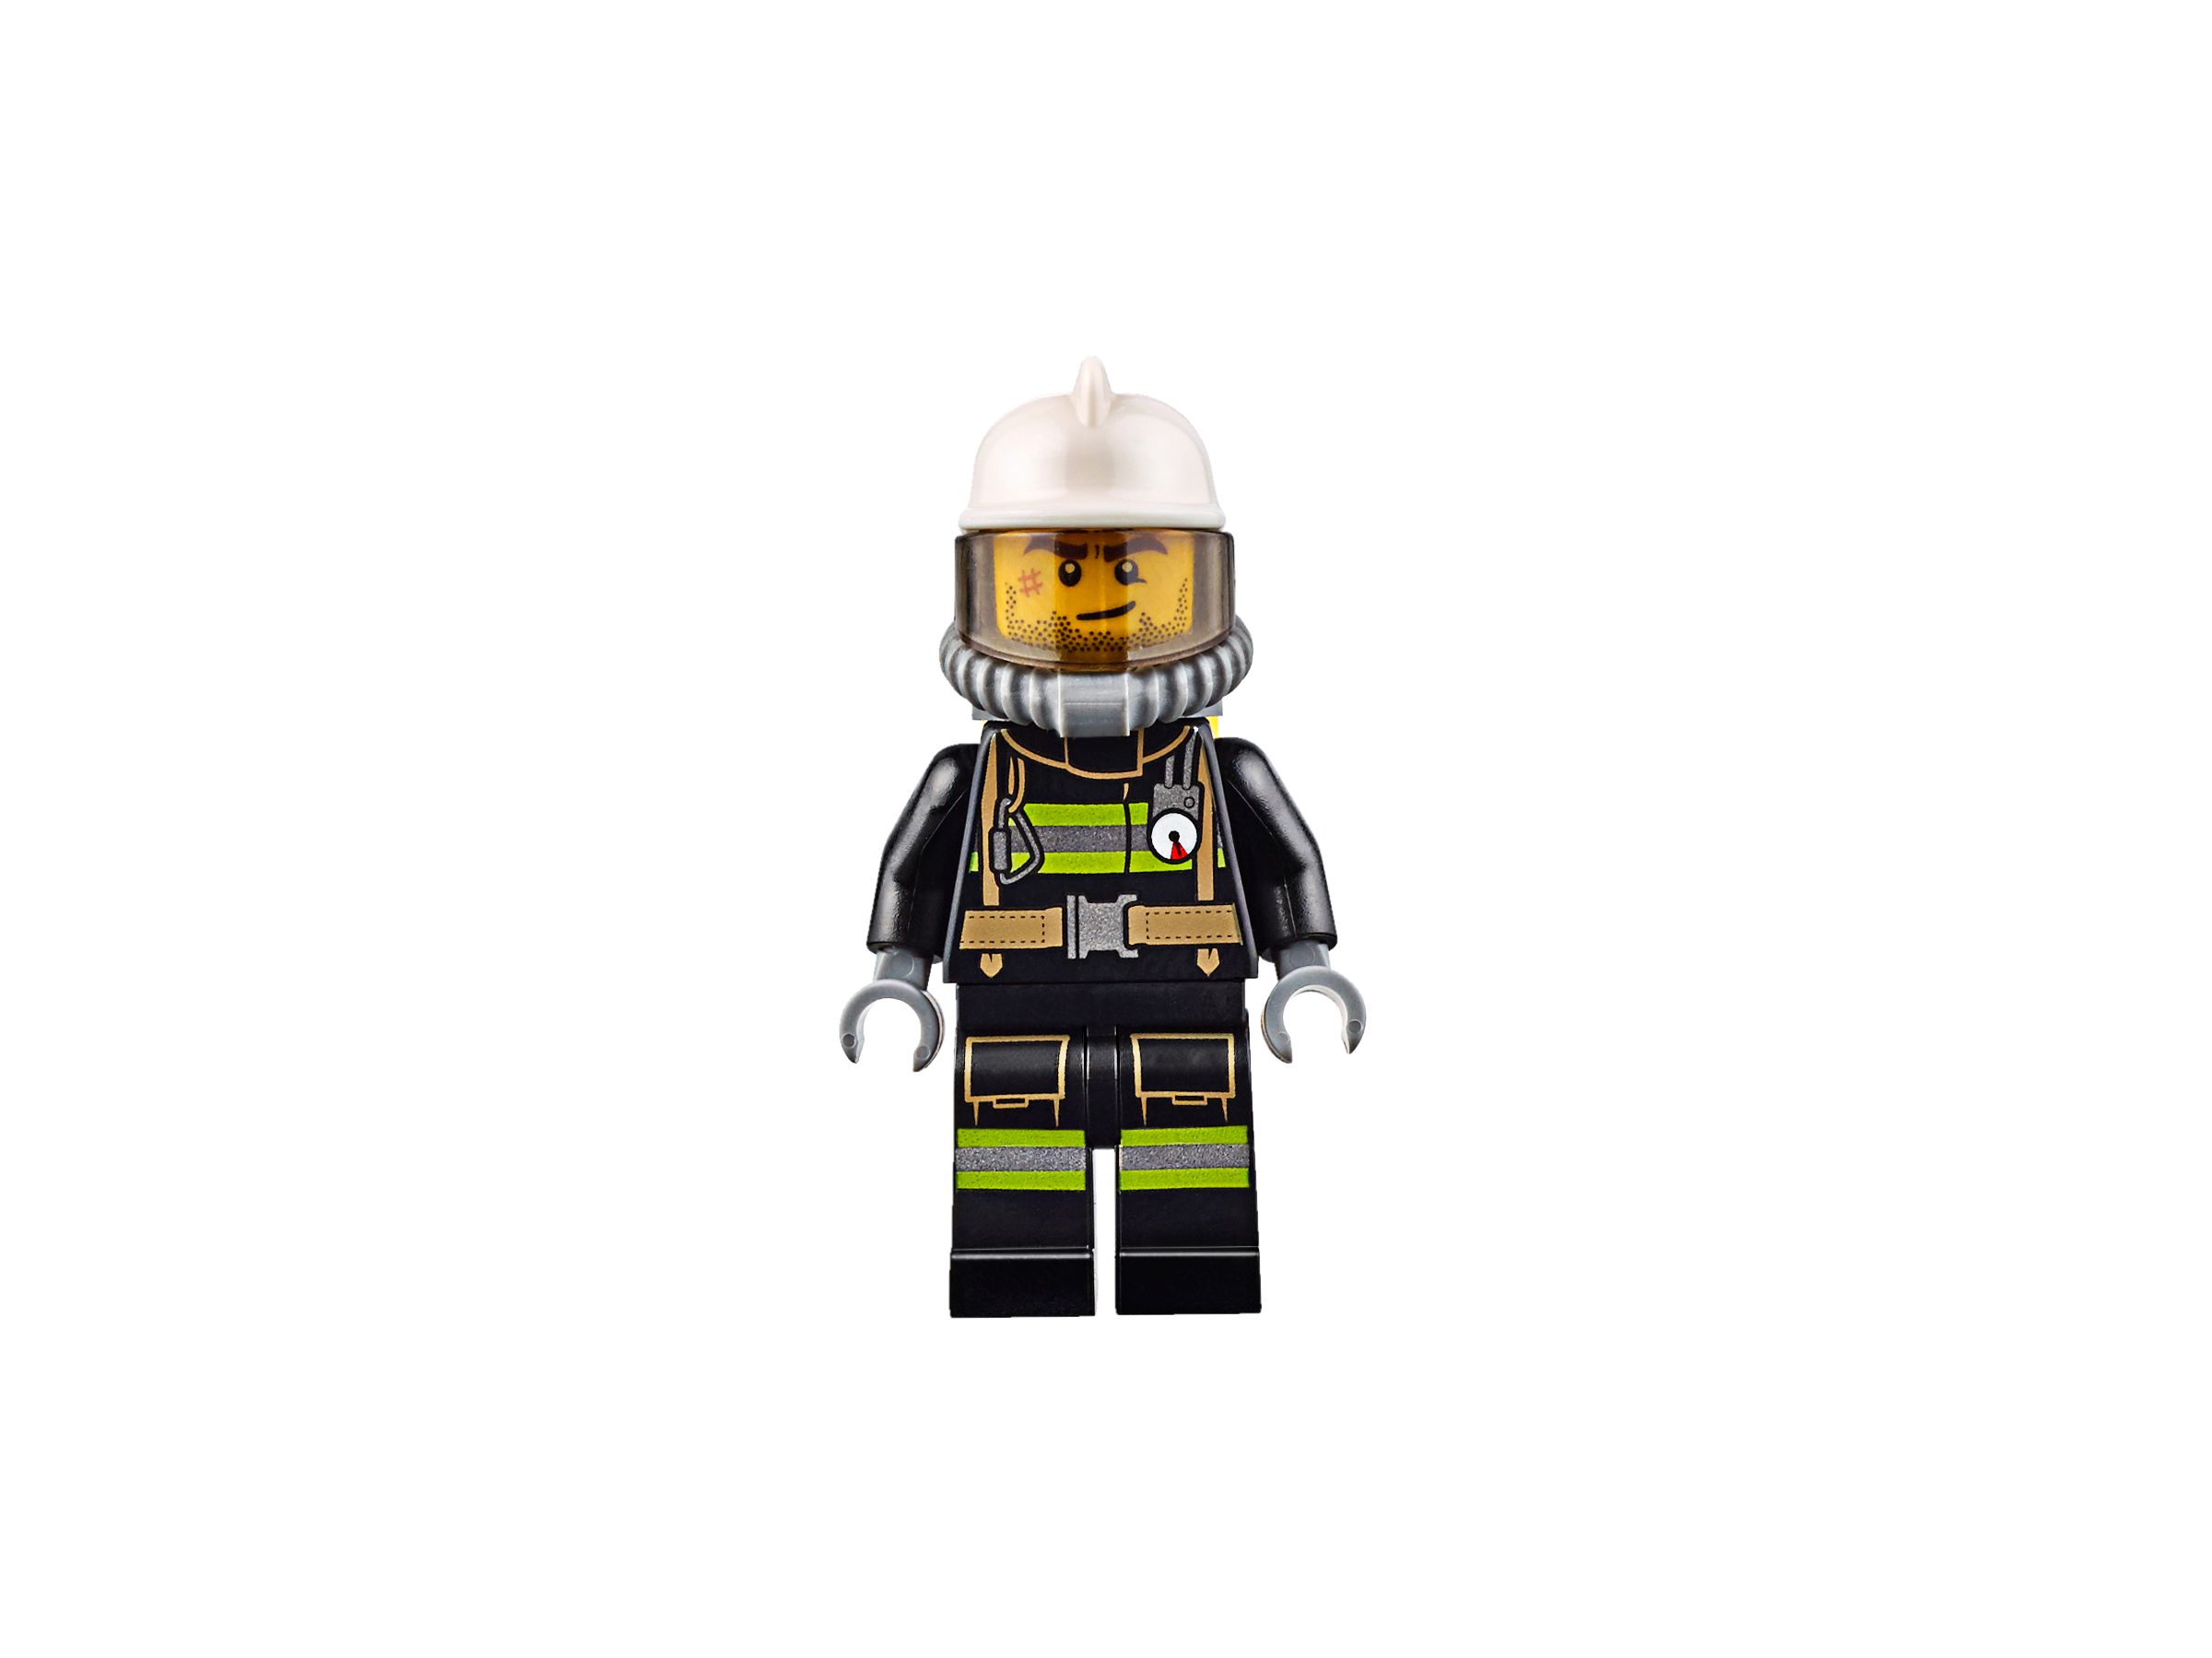 LEGO City 60111 Feuerwehr-Einsatzfahrzeug LEGO_60111_alt6.jpg